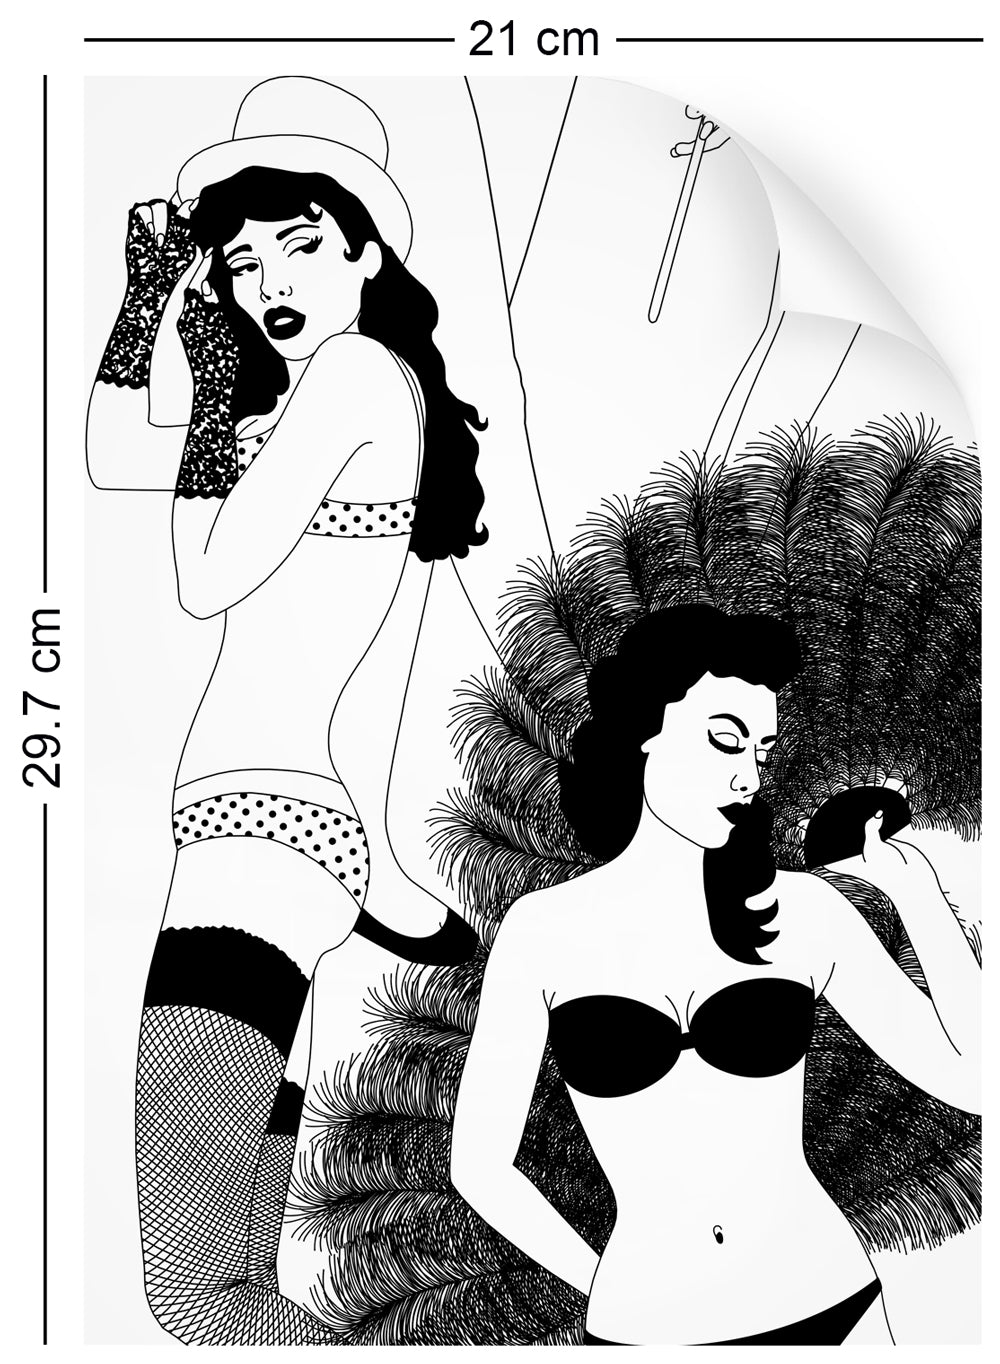 a4 wallpaper sample with burlesque dancer design in monochrome 